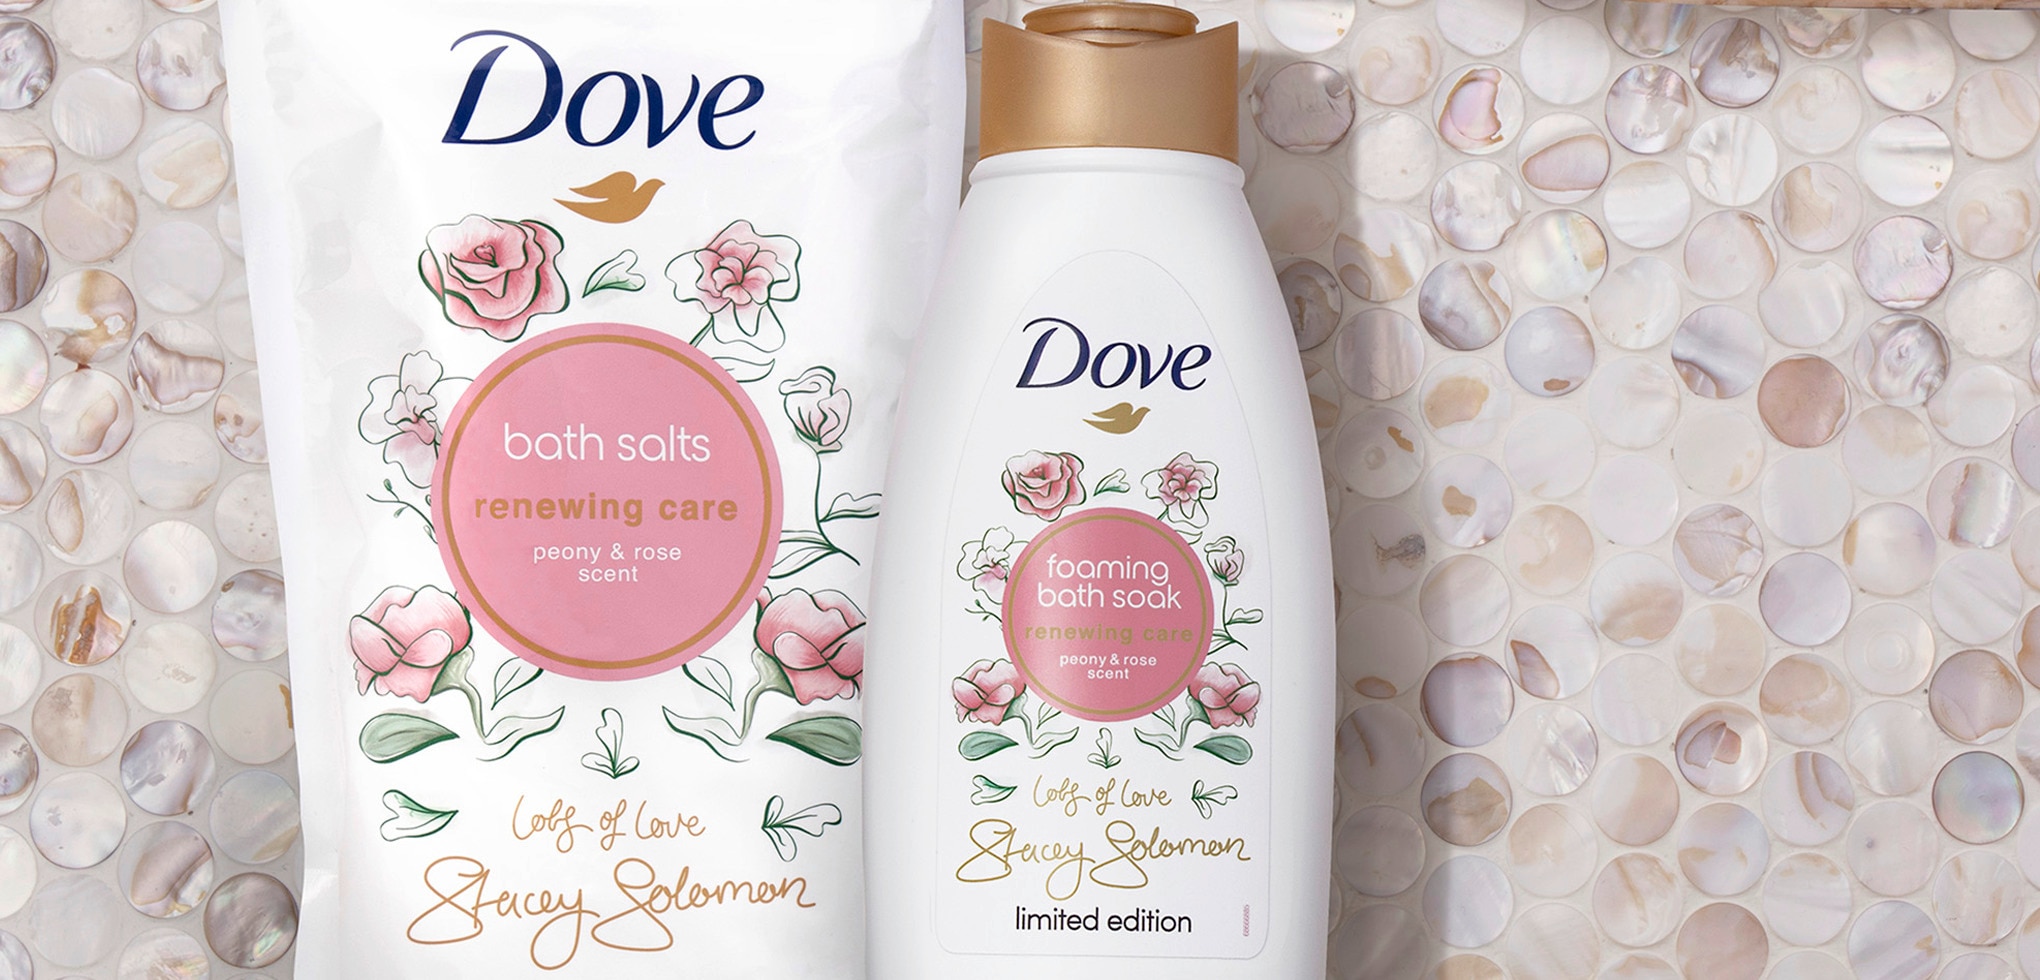 Dove Bath products